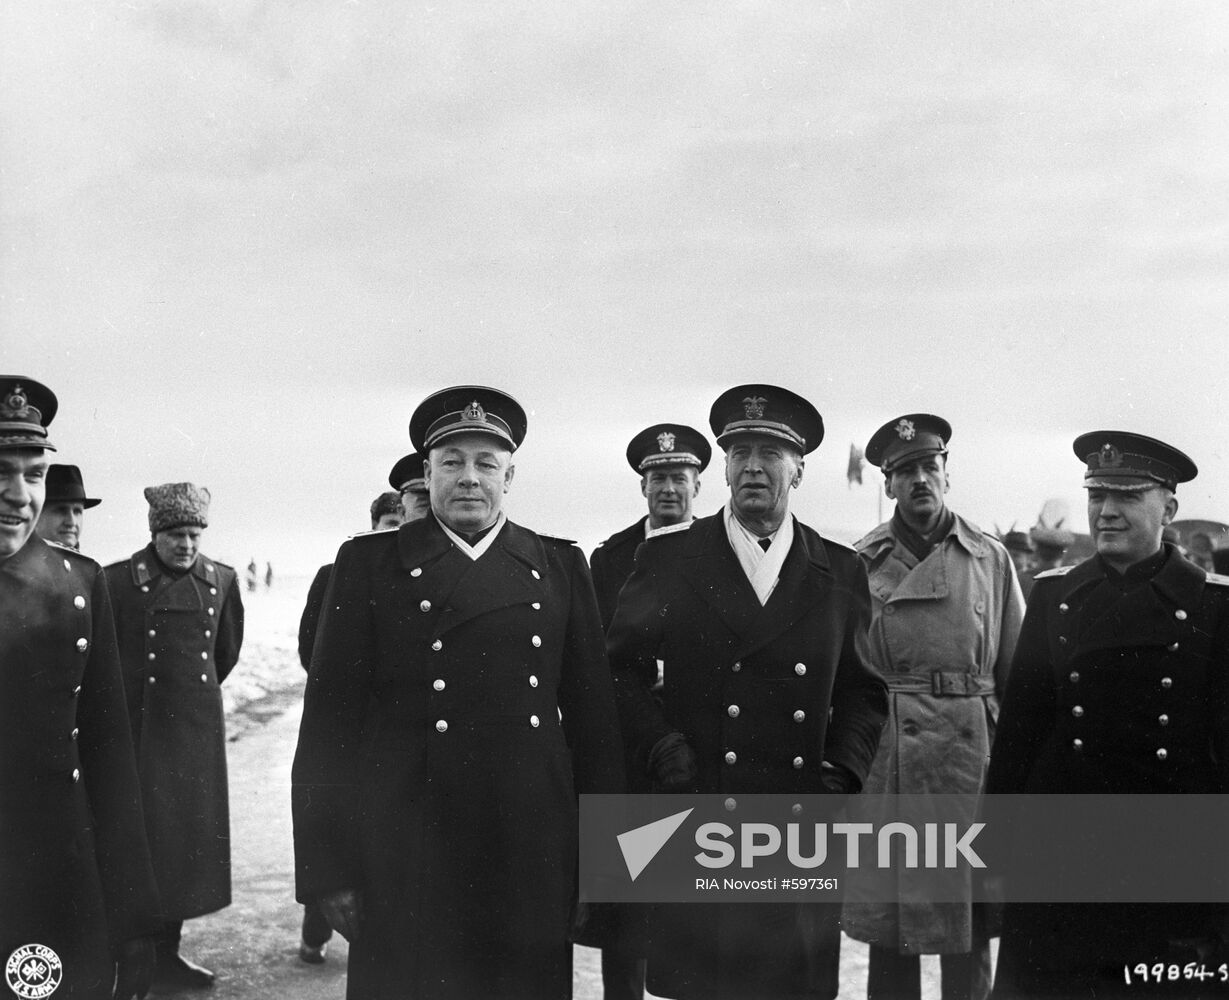 Yalta conference